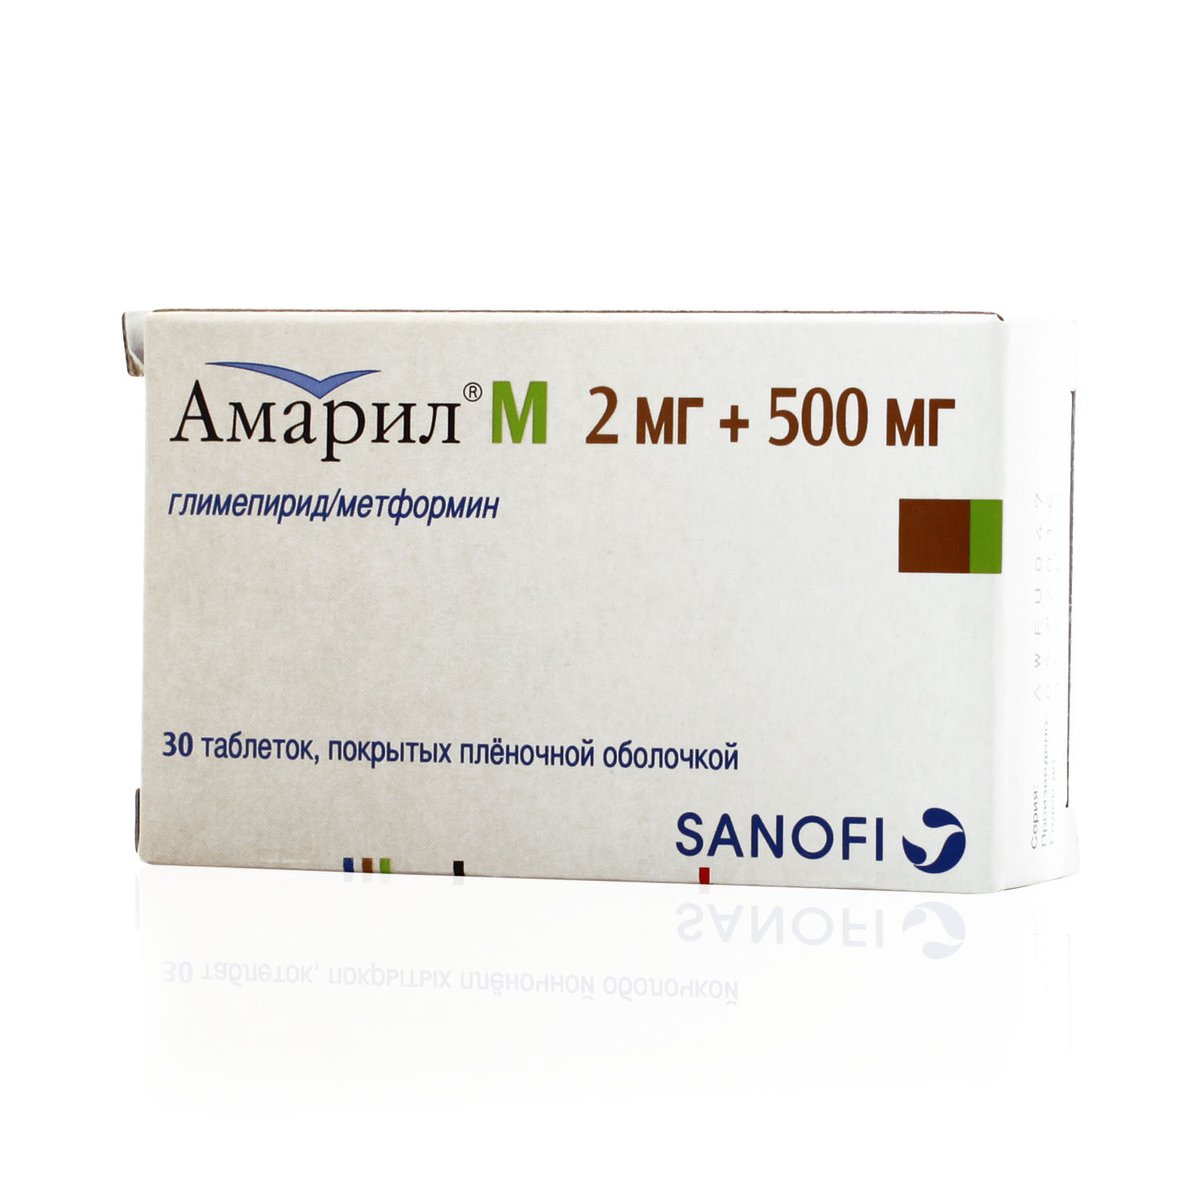 Амарил м (таблетки, 30 шт, 2 + 500 мг + мг, для приема внутрь) - цена .